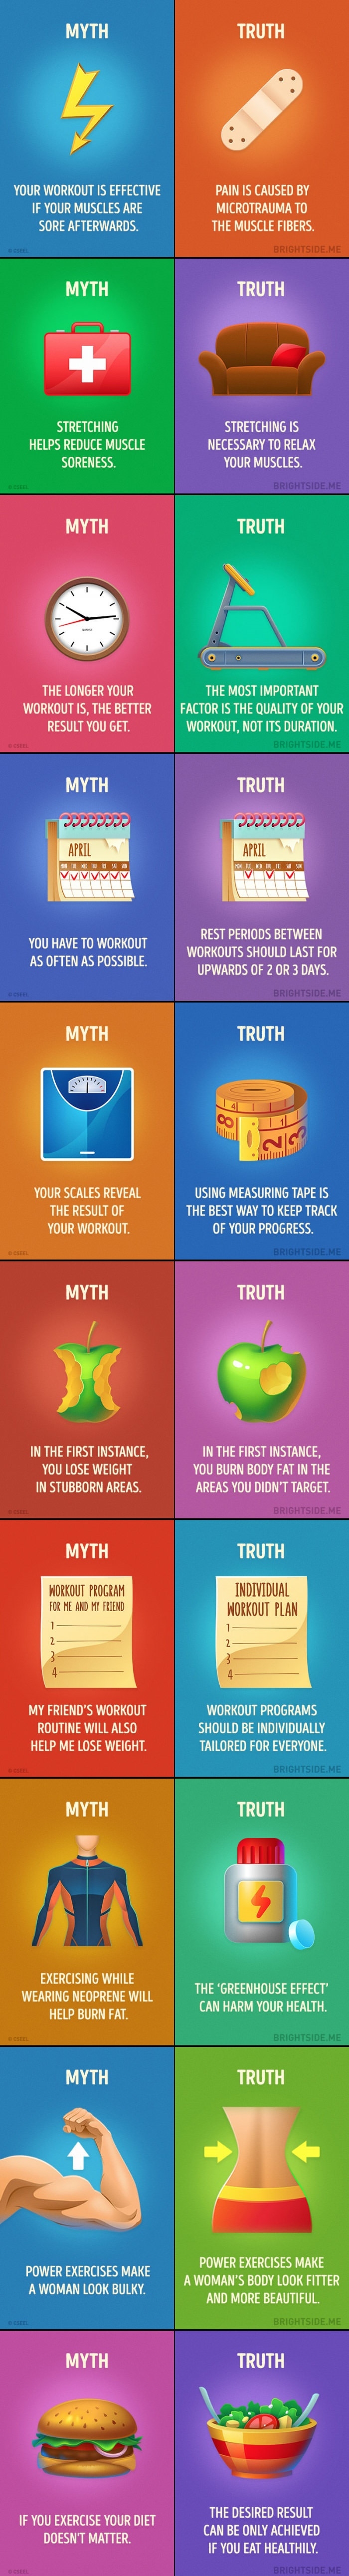 Fitness myths